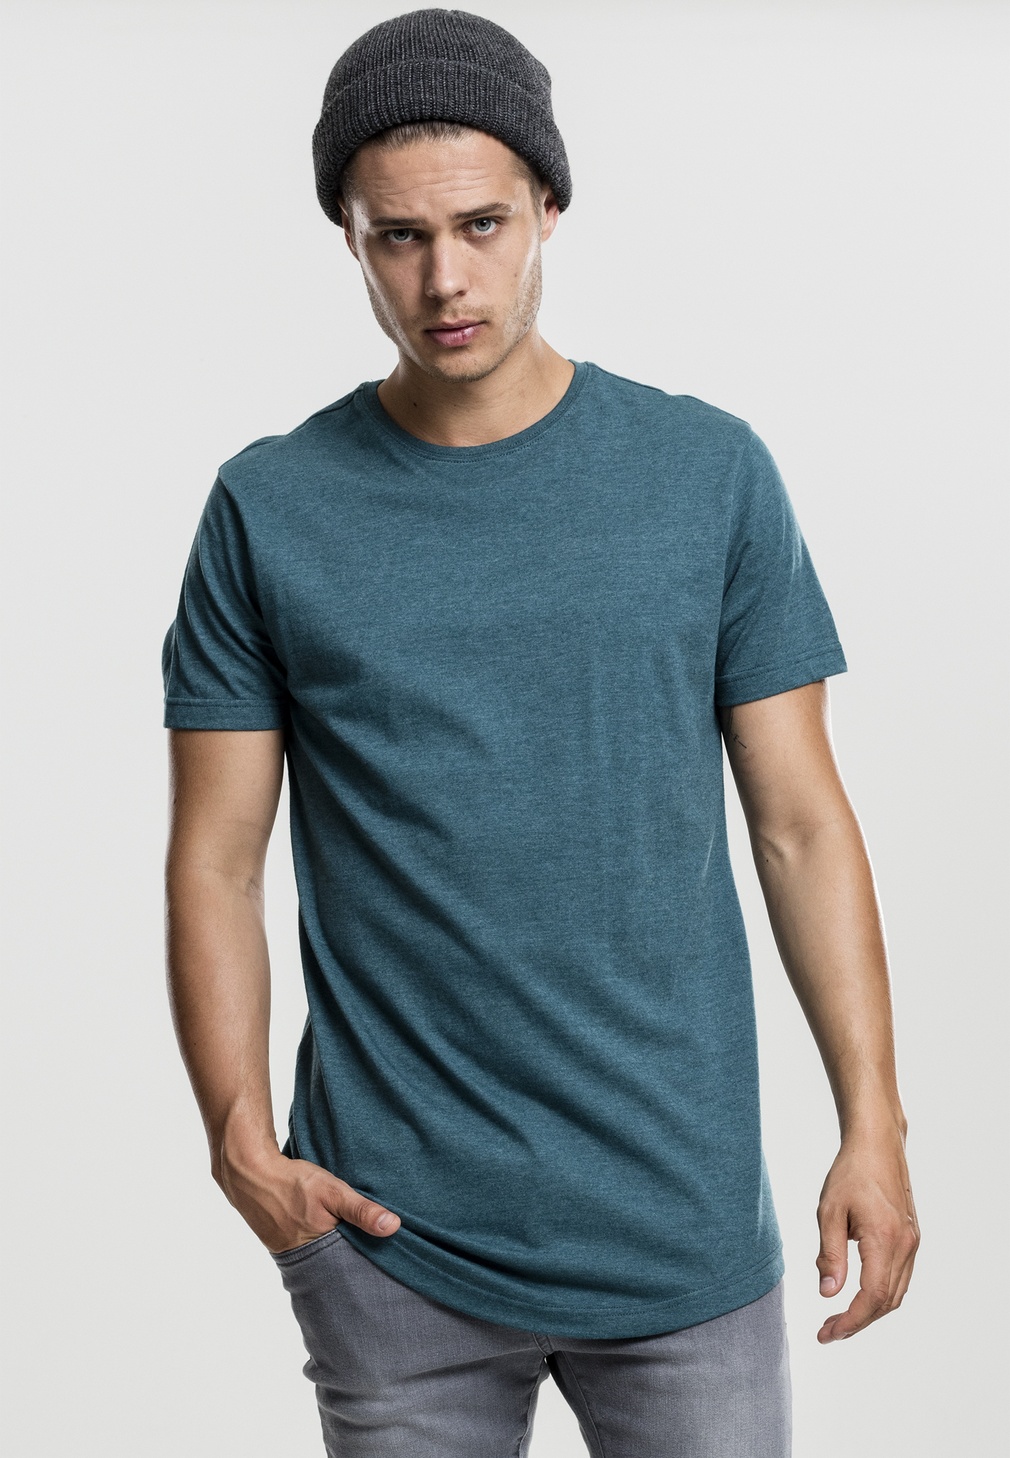 Classics / T-Shirt Lifestyle T-Shirts Long Shaped | Urban Tops Charcoal Tee Melange Herren | |